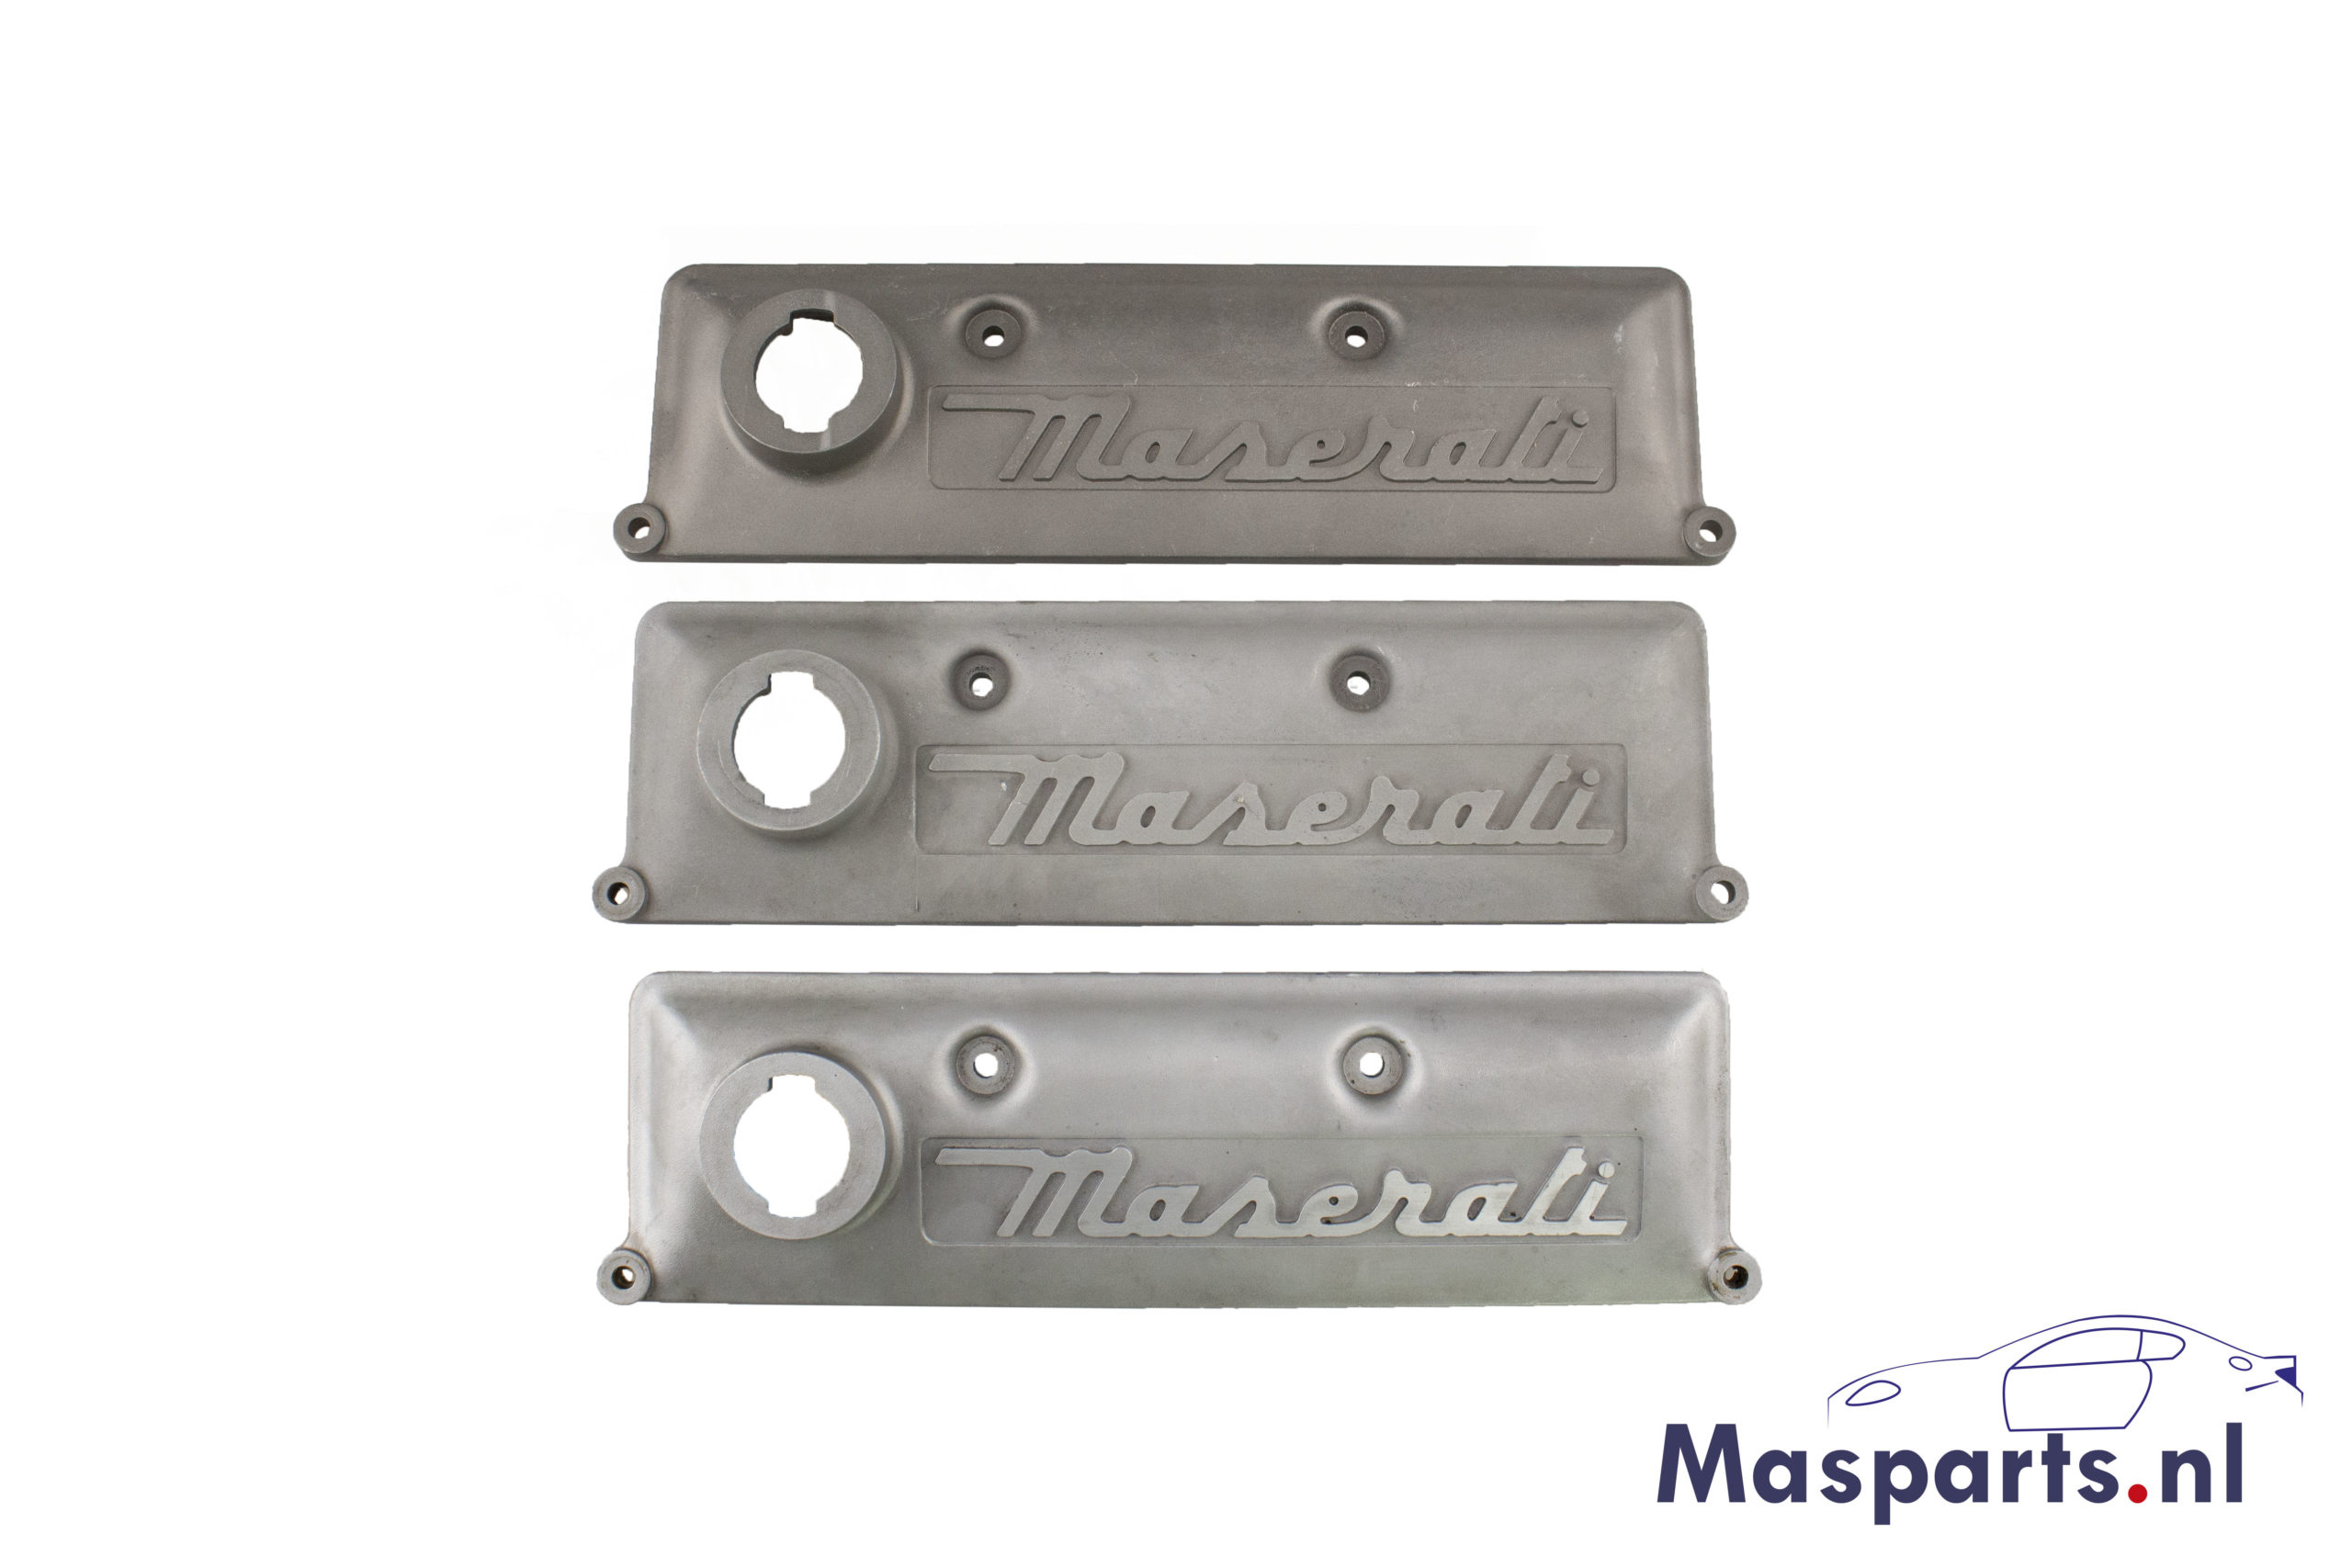 Maserati Biturbo valve covers set 311022328 all versions